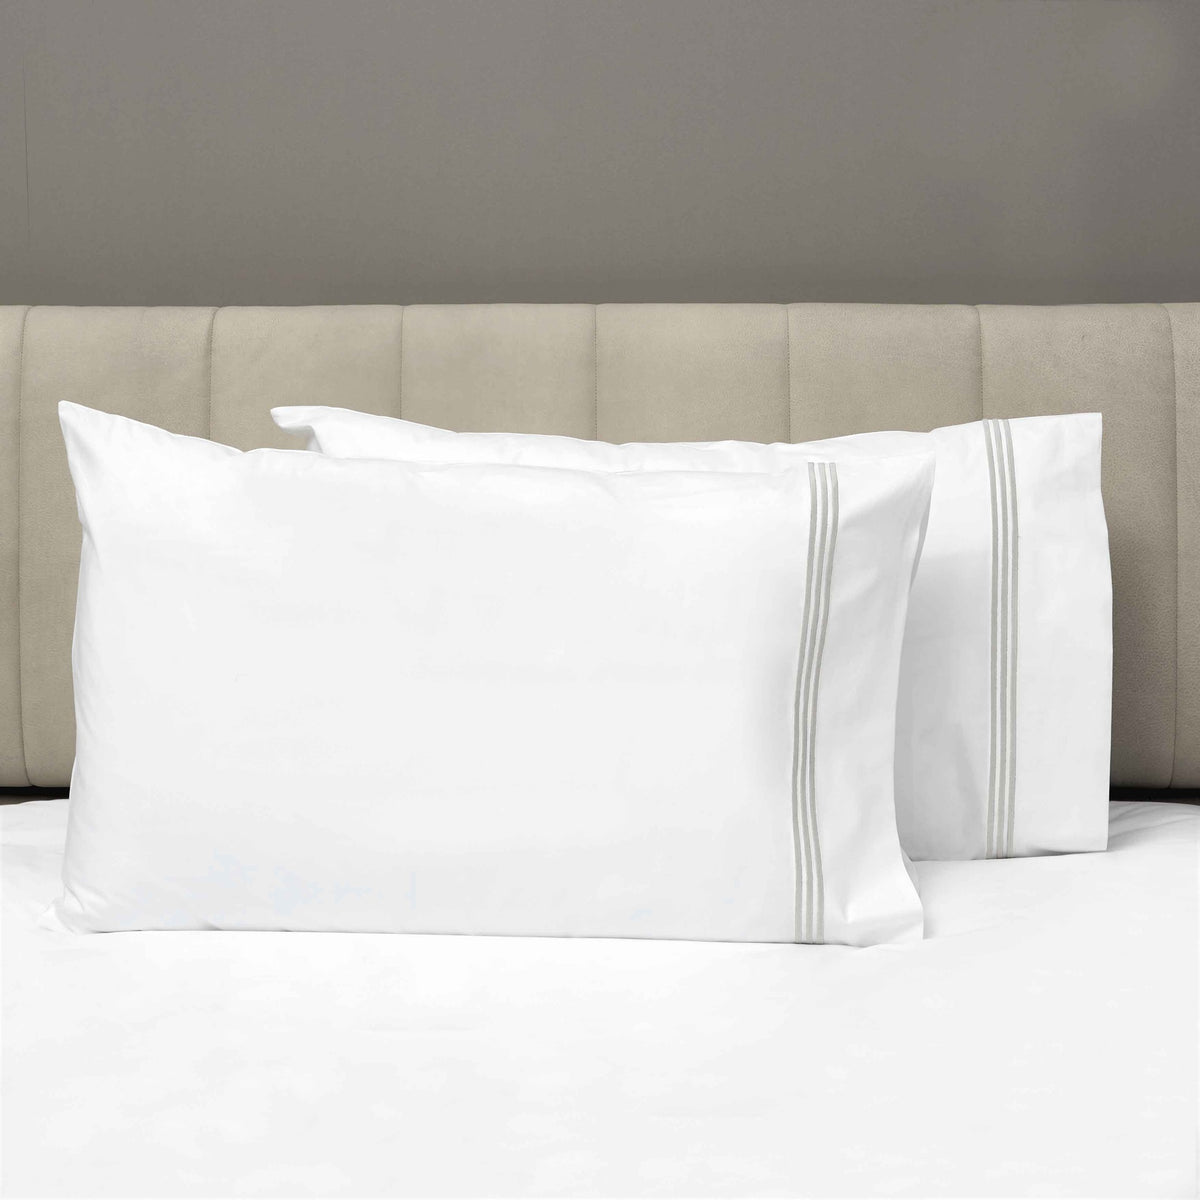 Pair of Pillowcases of Signoria Platinum Percale Bedding in White/Pearl Color